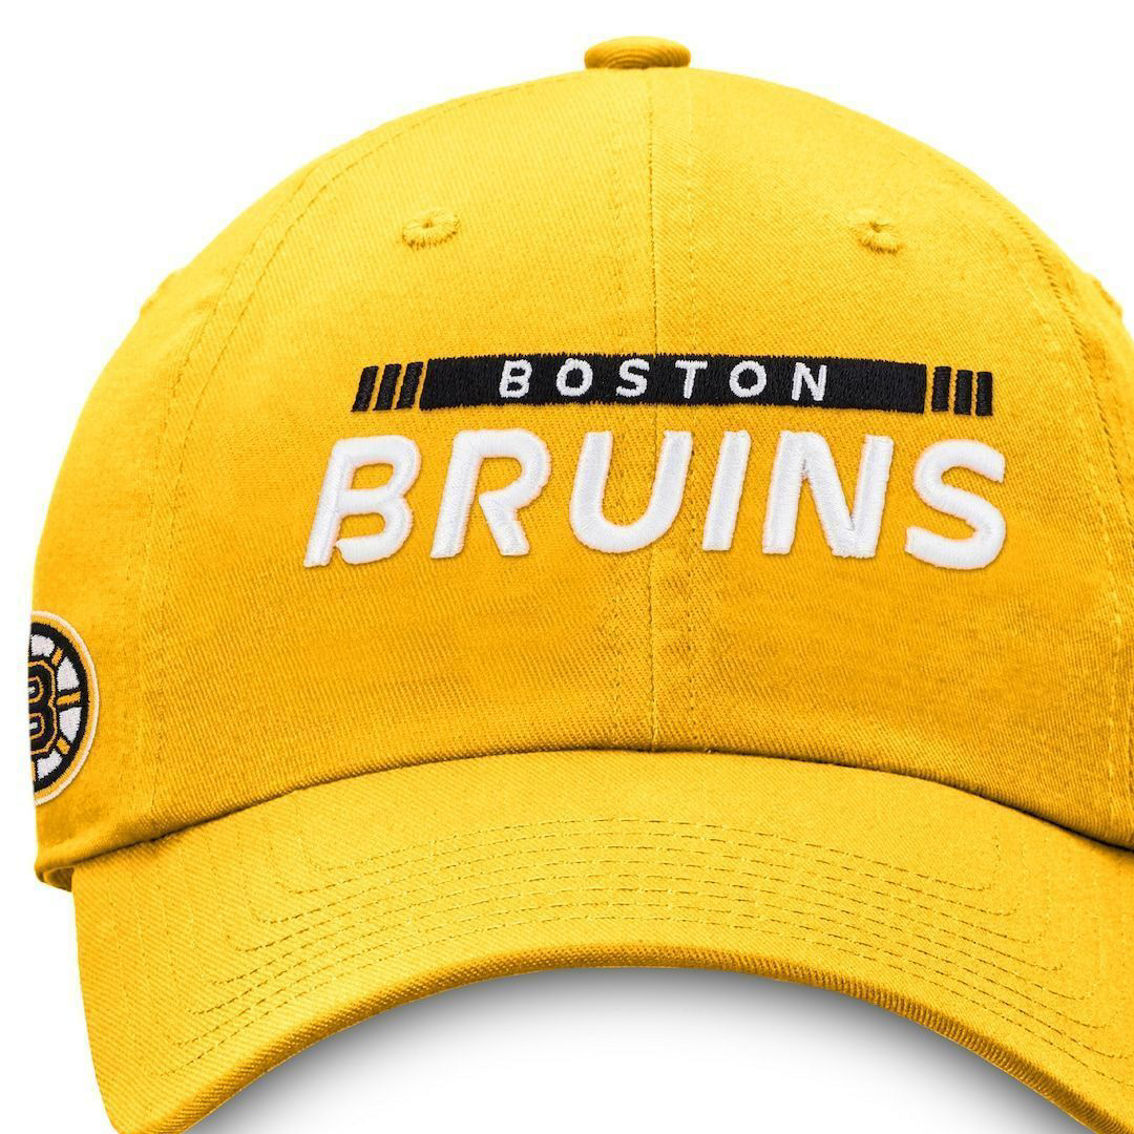 Fanatics Branded Men's Gold Boston Bruins Authentic Pro Rink Adjustable Hat - Image 3 of 4